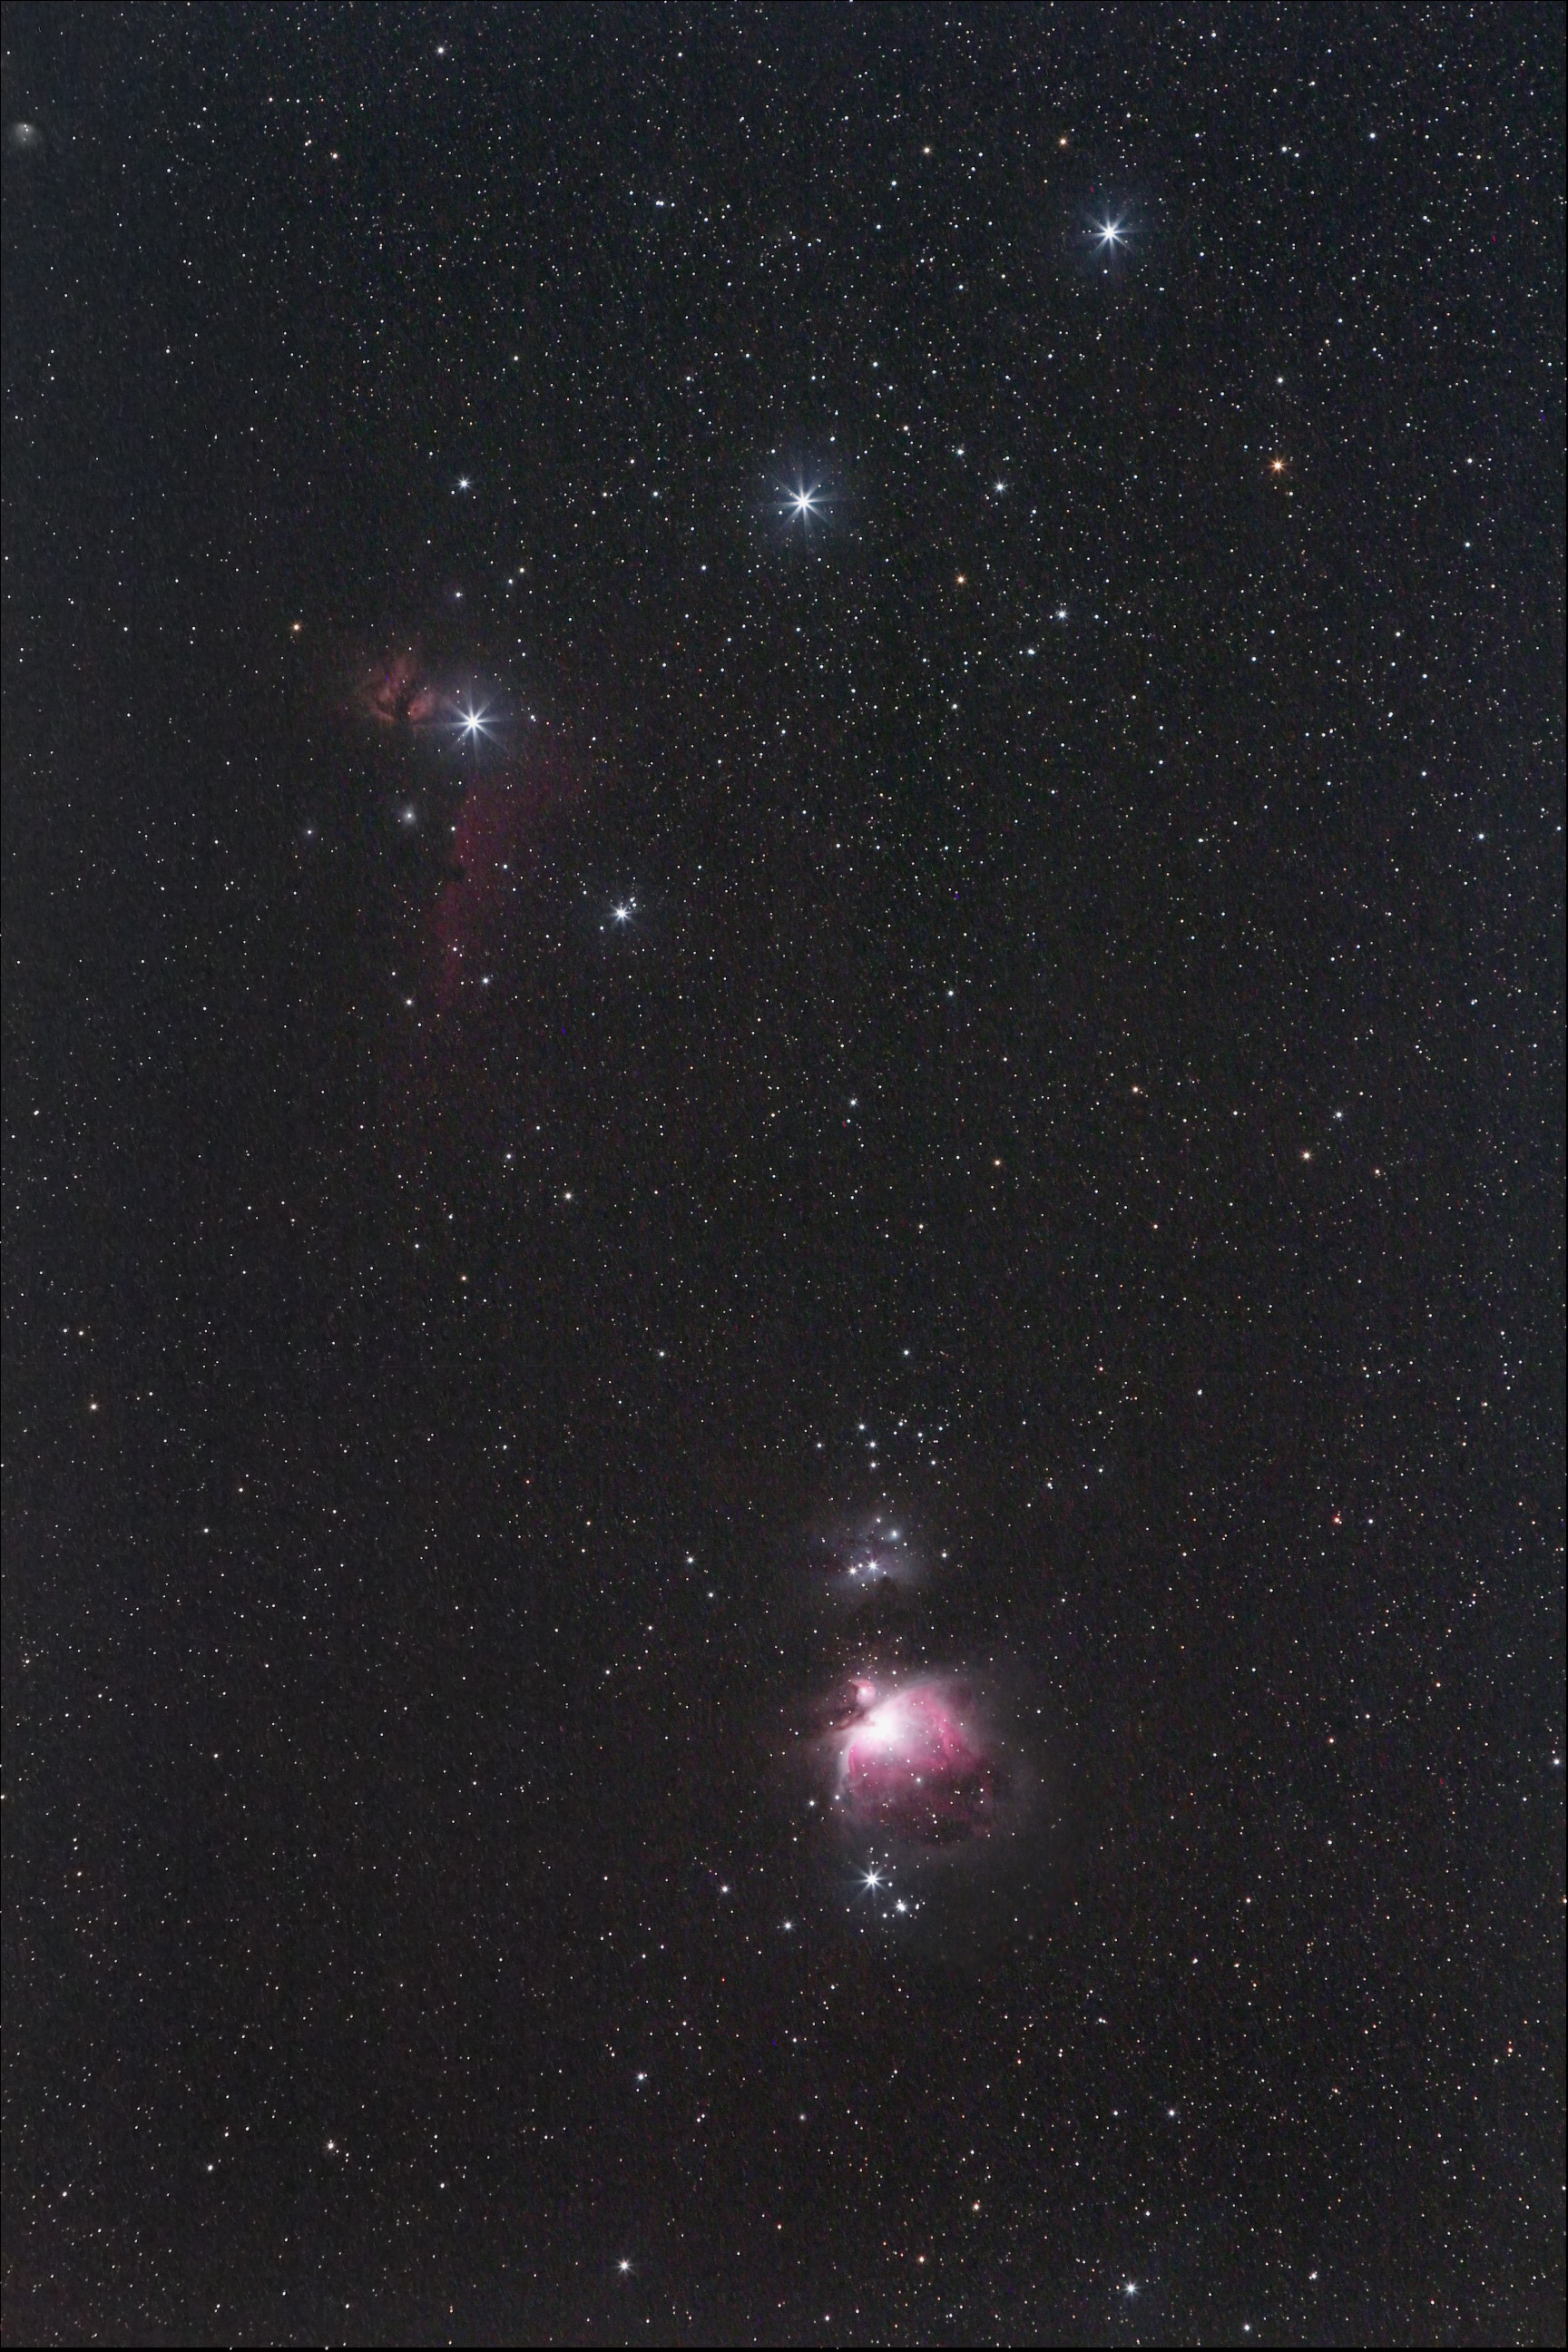 View larger. Three medium bright stars in a short, straight row represent